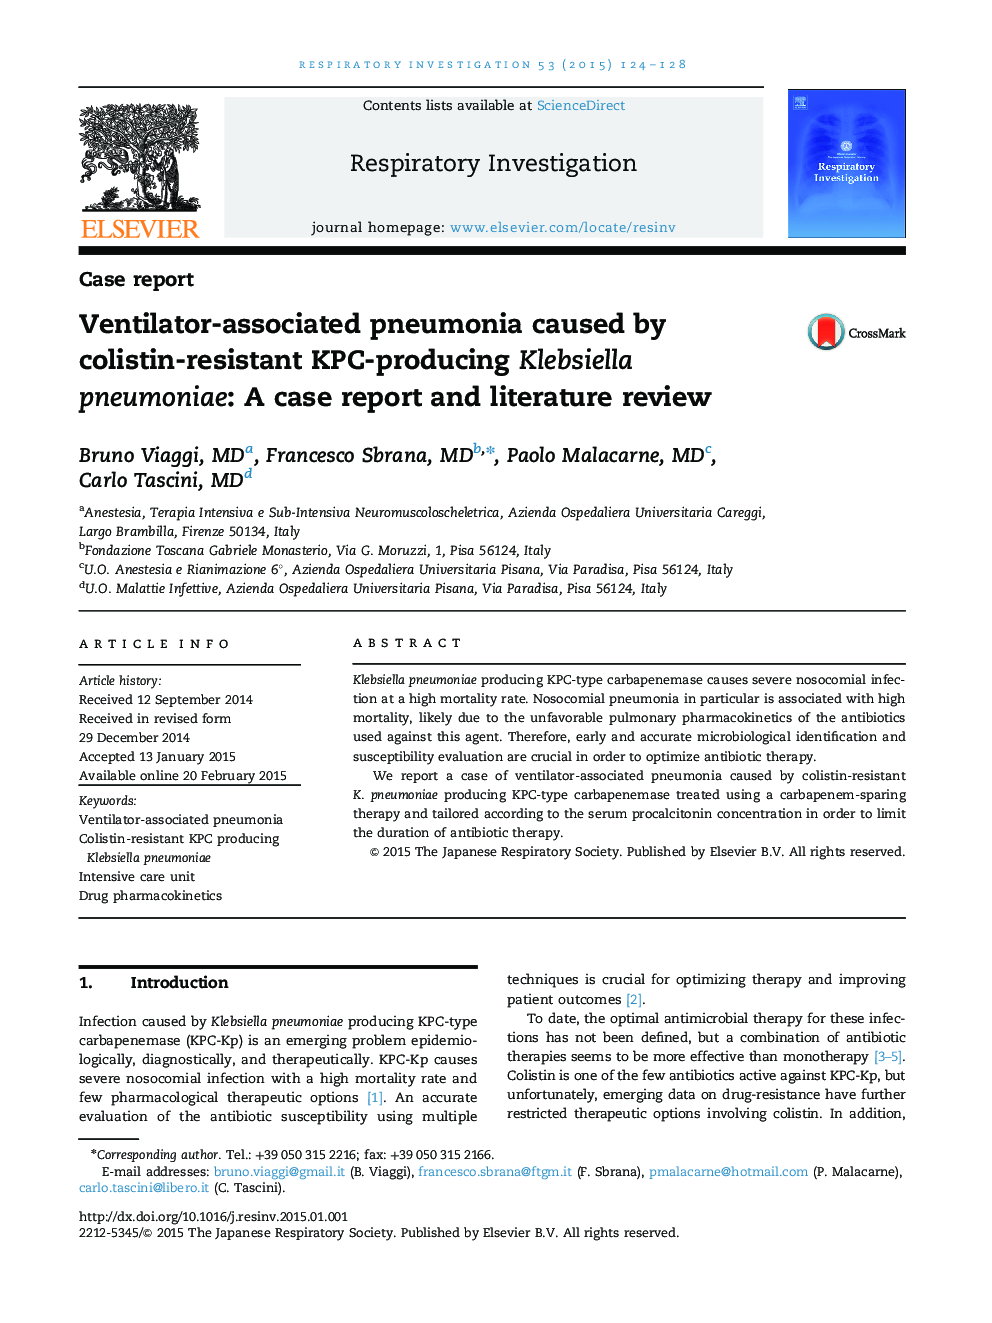 Ventilator-associated pneumonia caused by colistin-resistant KPC-producing Klebsiella pneumoniae: A case report and literature review